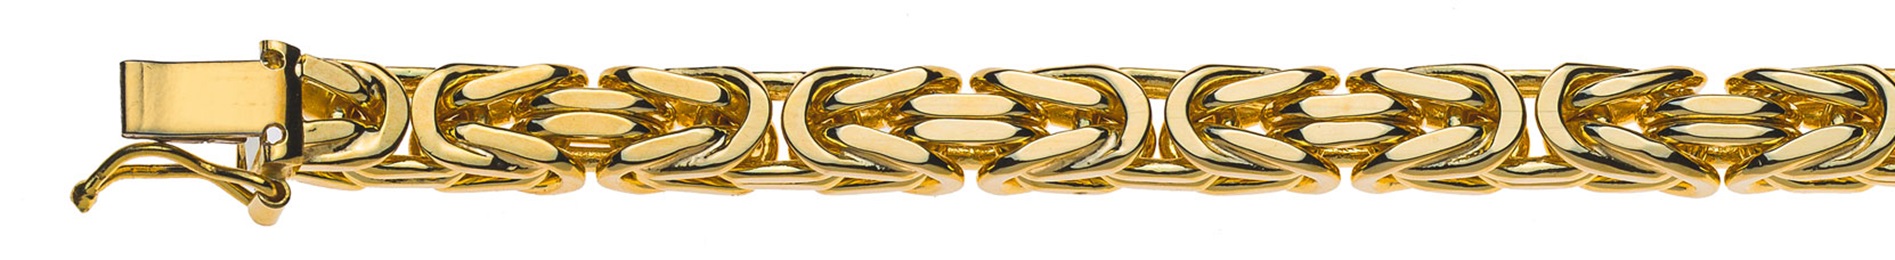 AURONOS Prestige Necklace yellow gold 18K king chain 50cm 5mm